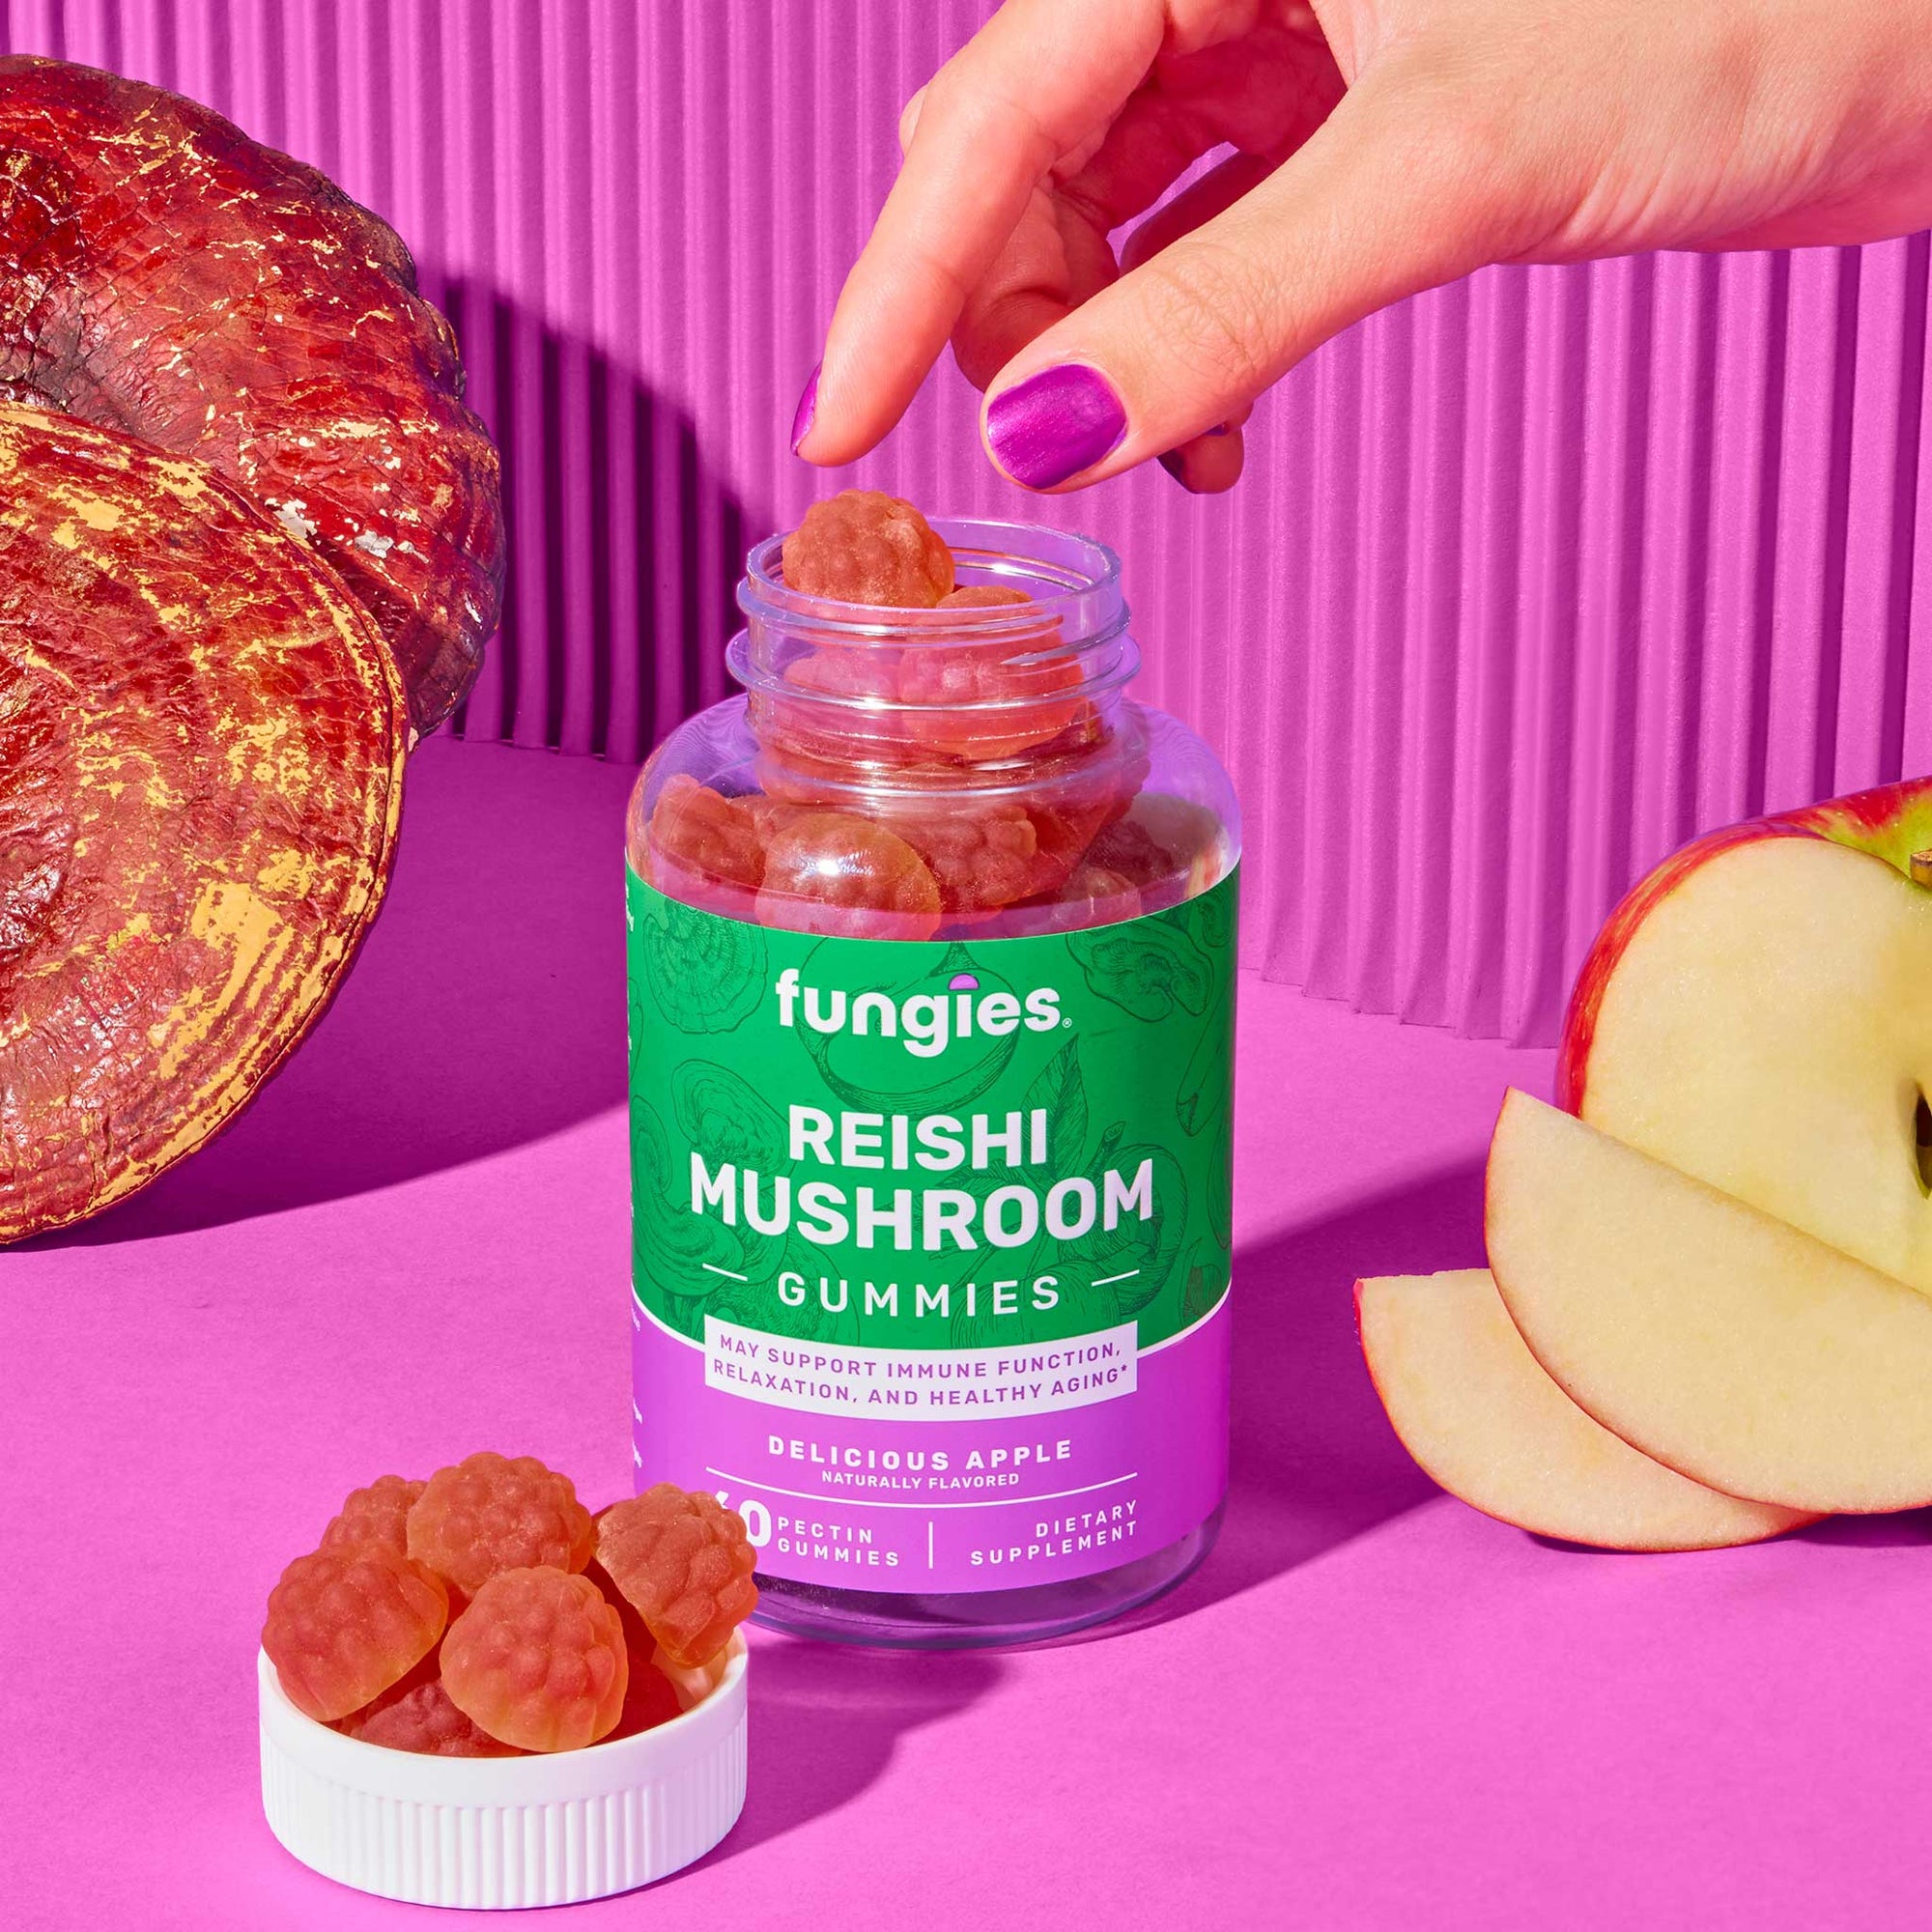 Grabbing Reishi Mushroom Gummies on a purple background